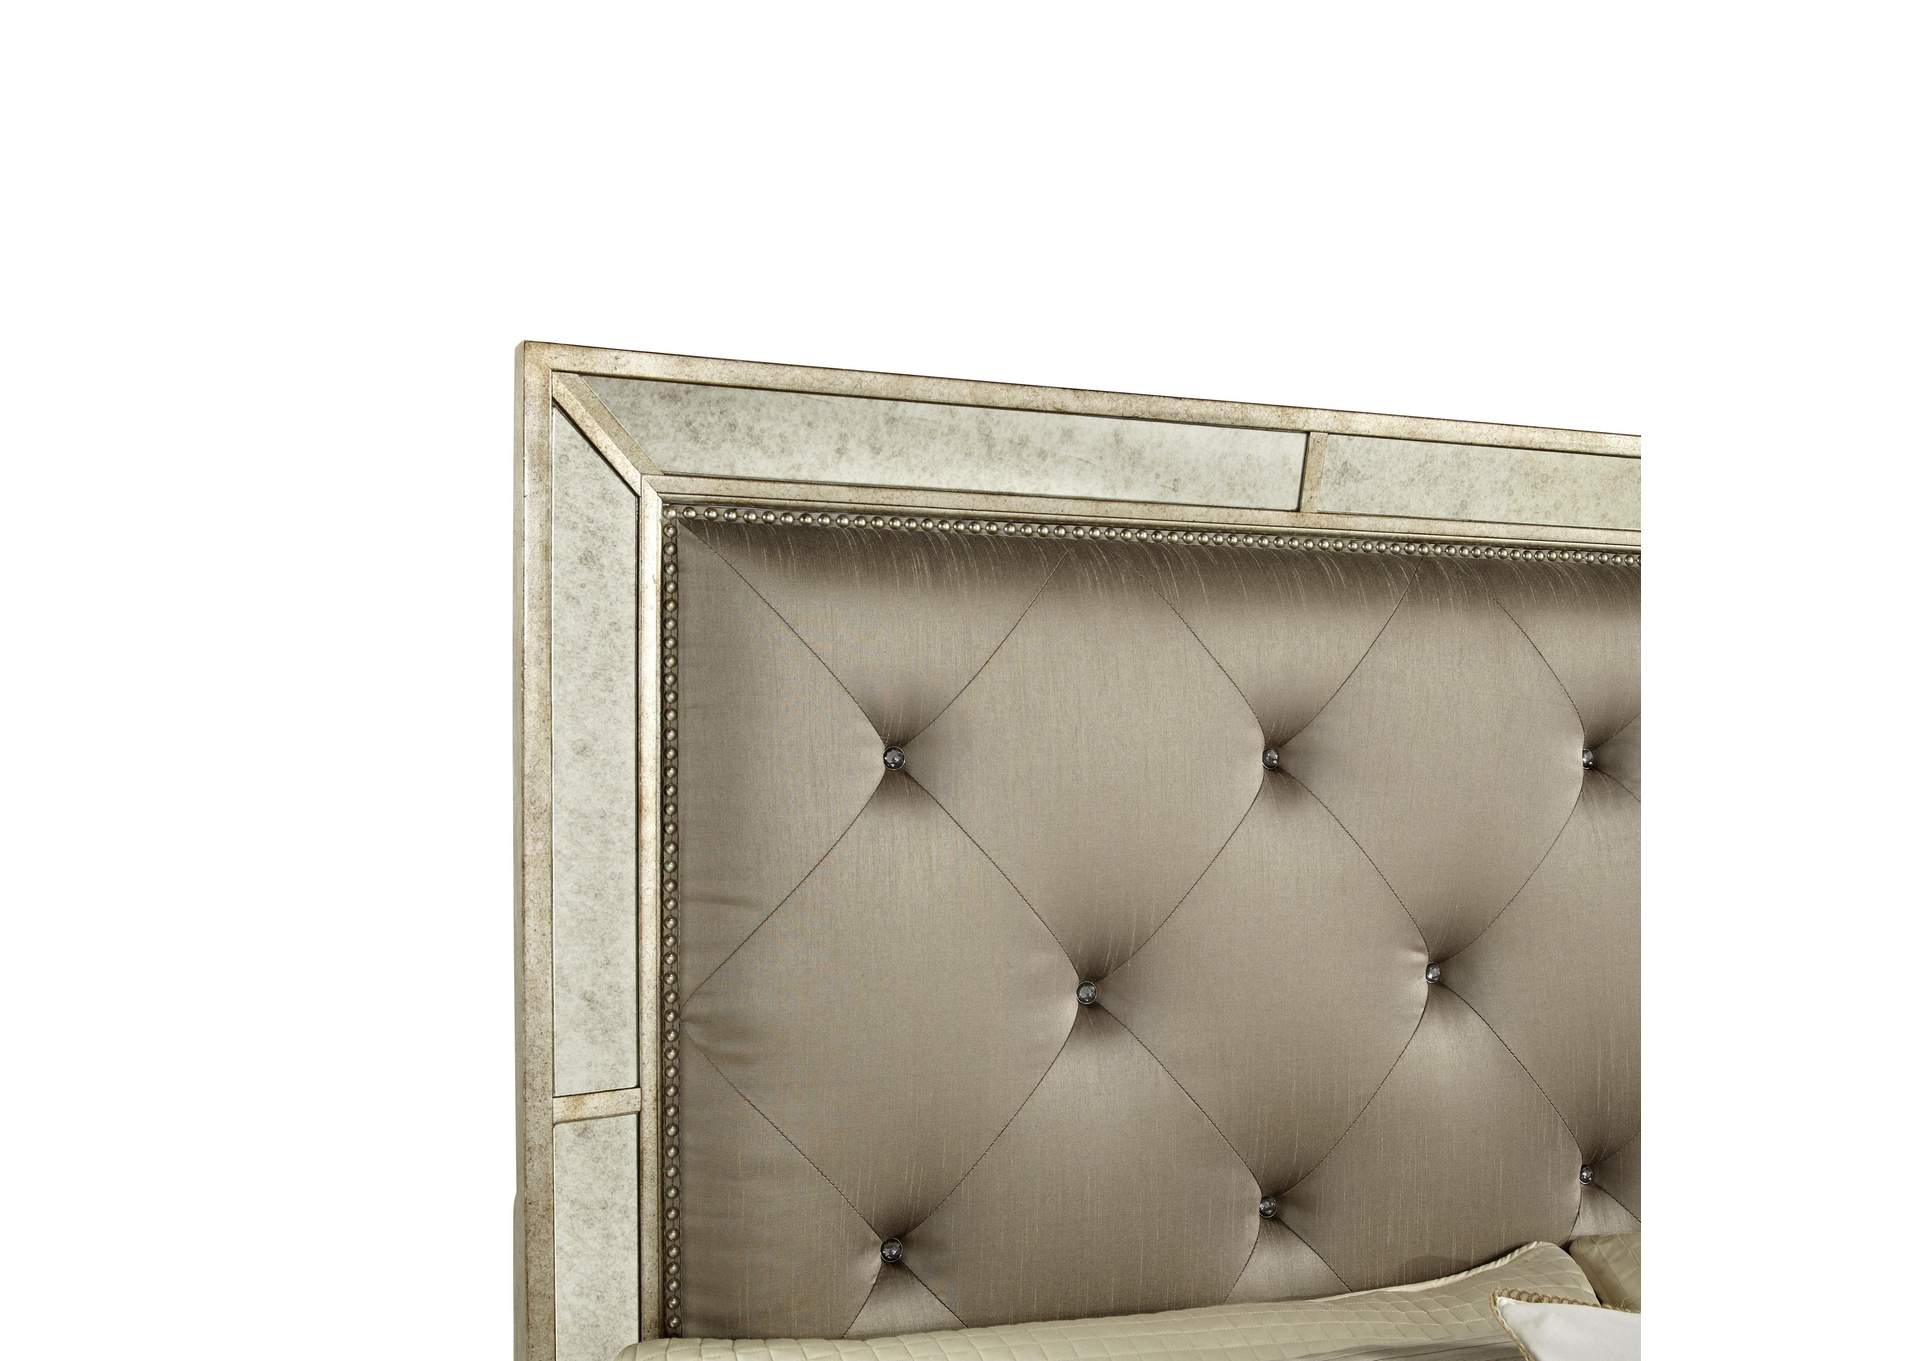 Farrah California King Bed,Pulaski Furniture